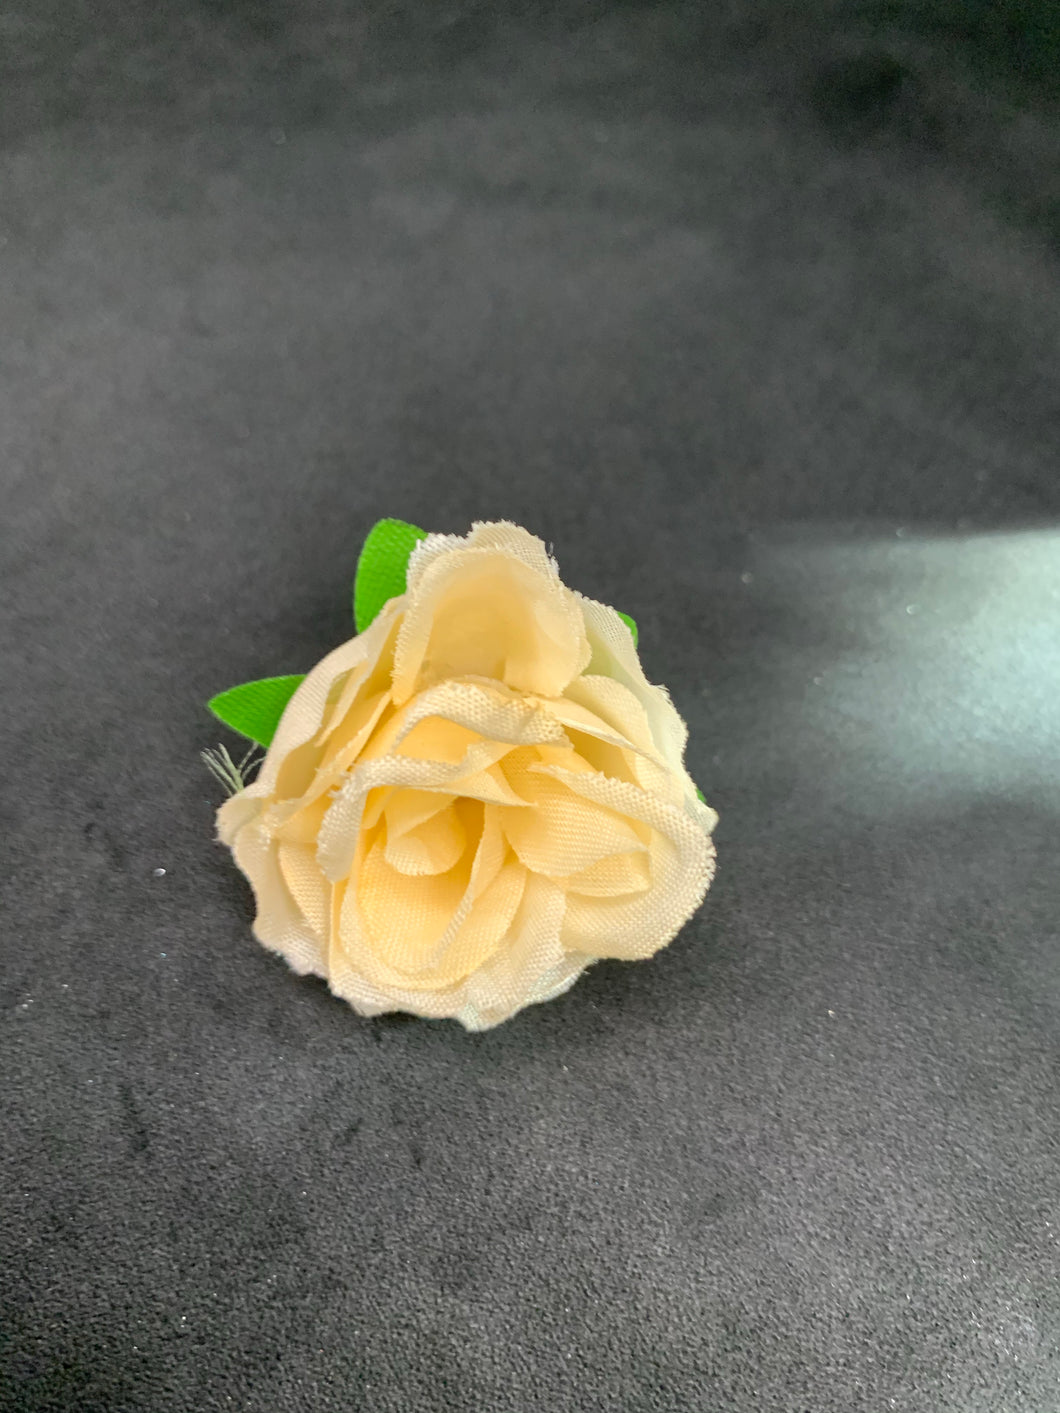 Light yellow rose